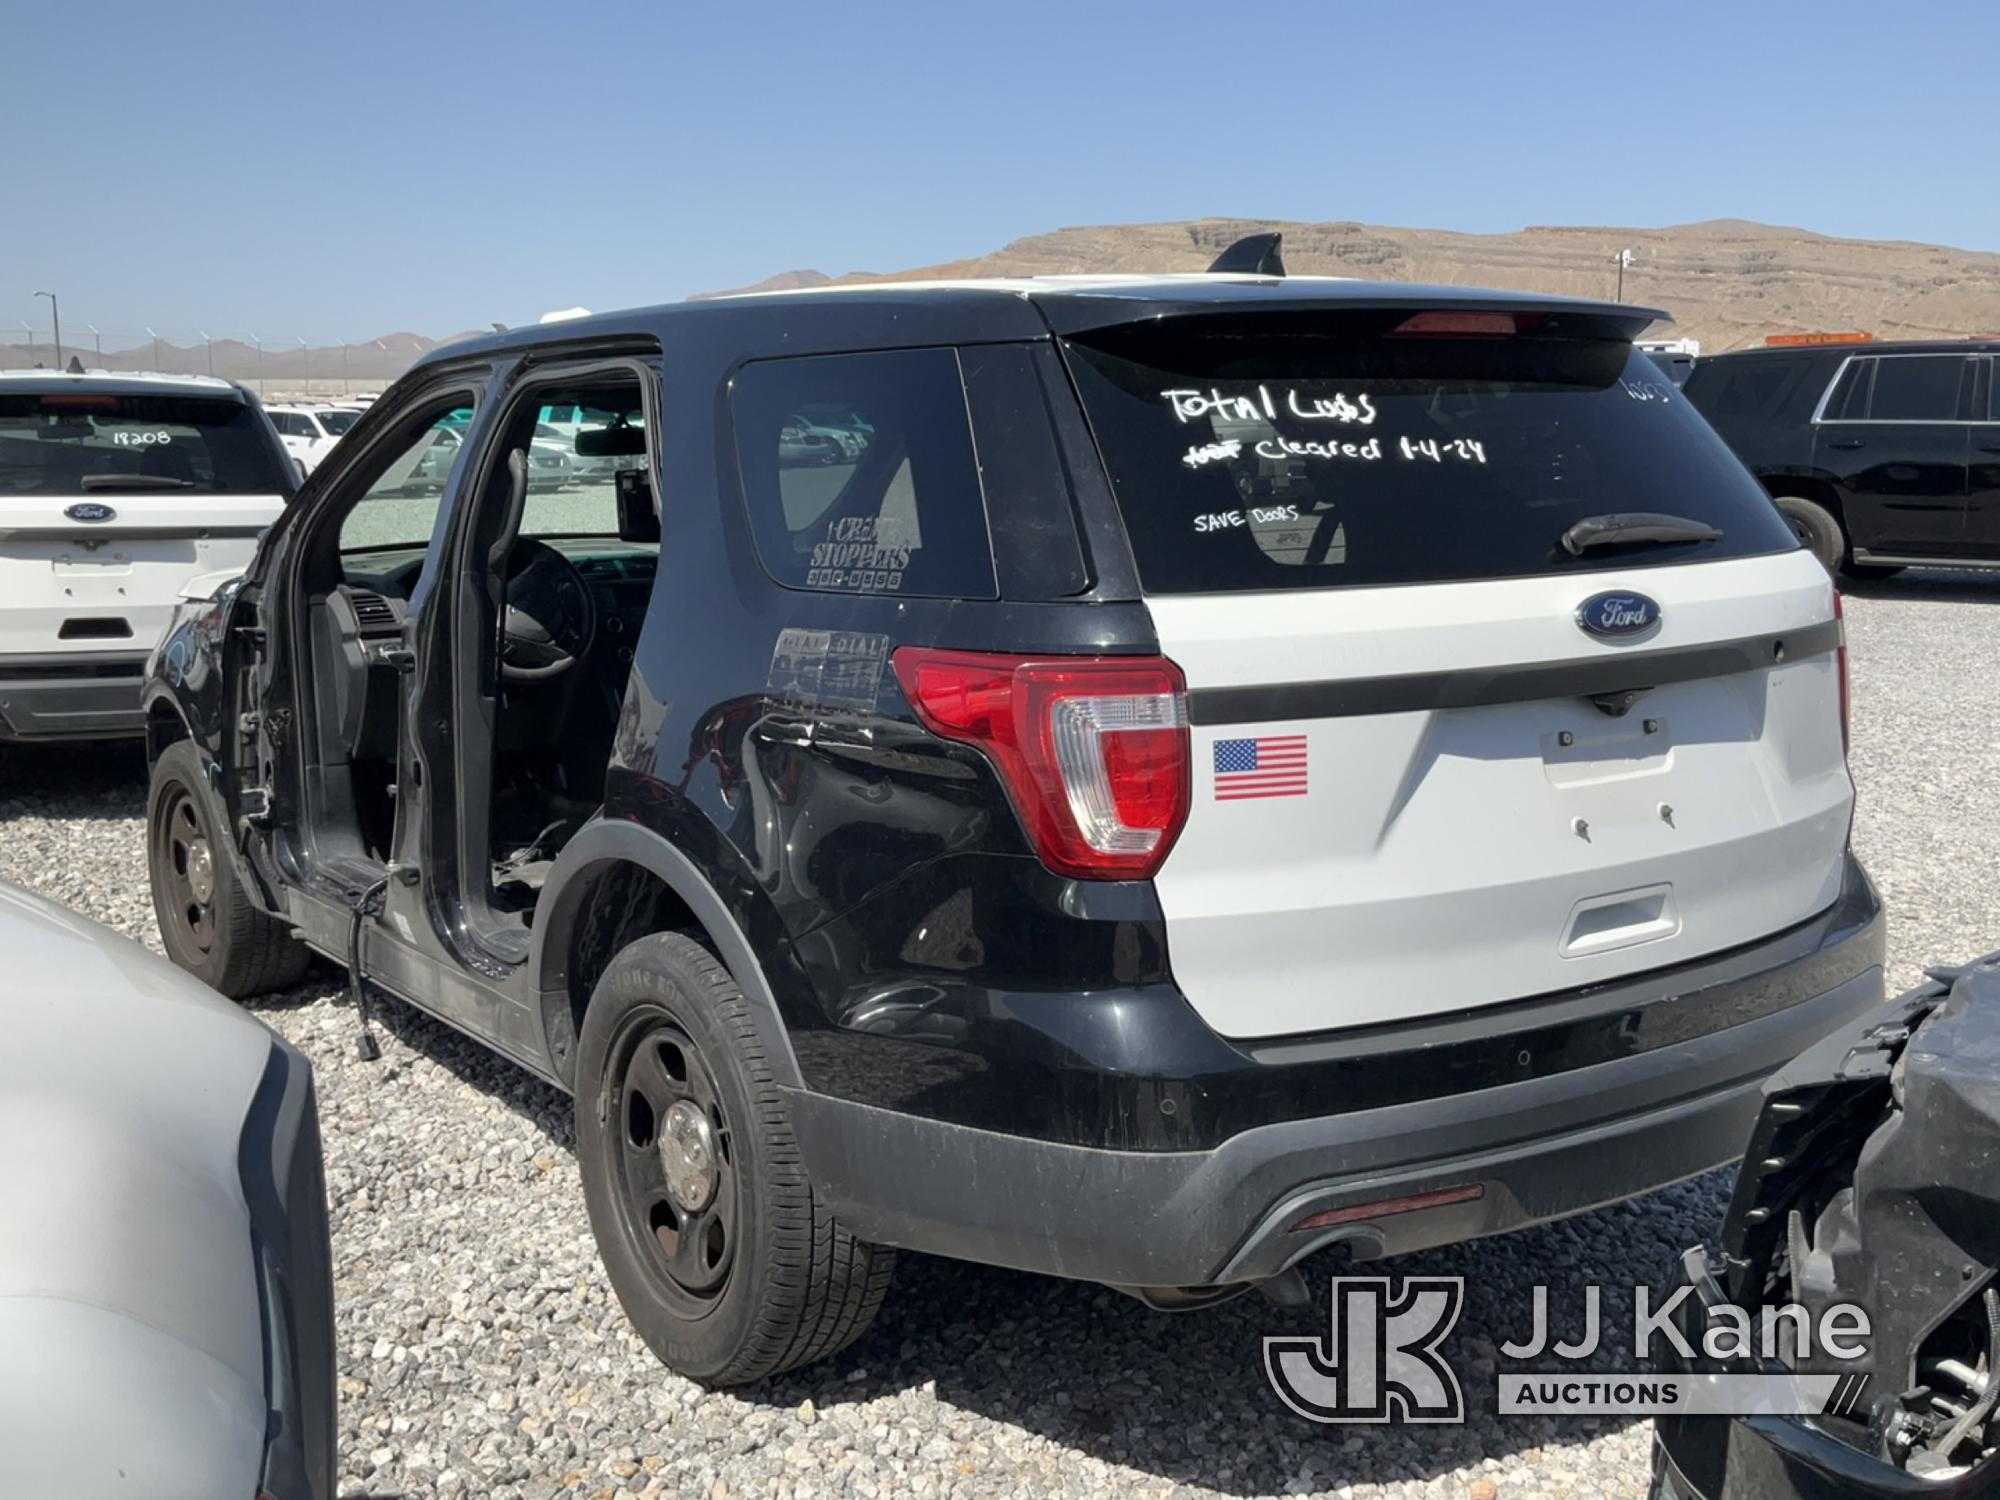 (Las Vegas, NV) 2016 Ford Explorer AWD Police Interceptor Towed In, Missing Parts Jump To Start, Run